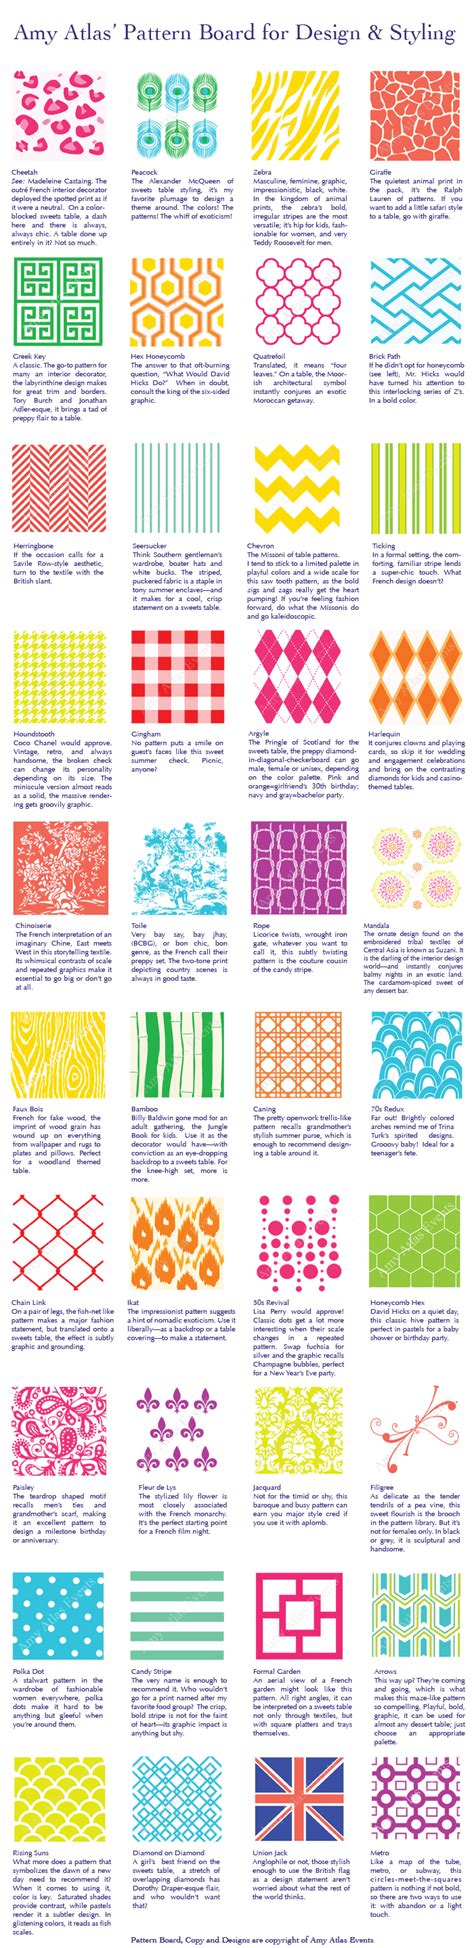 Amy Atlas Glossary Of Patterns